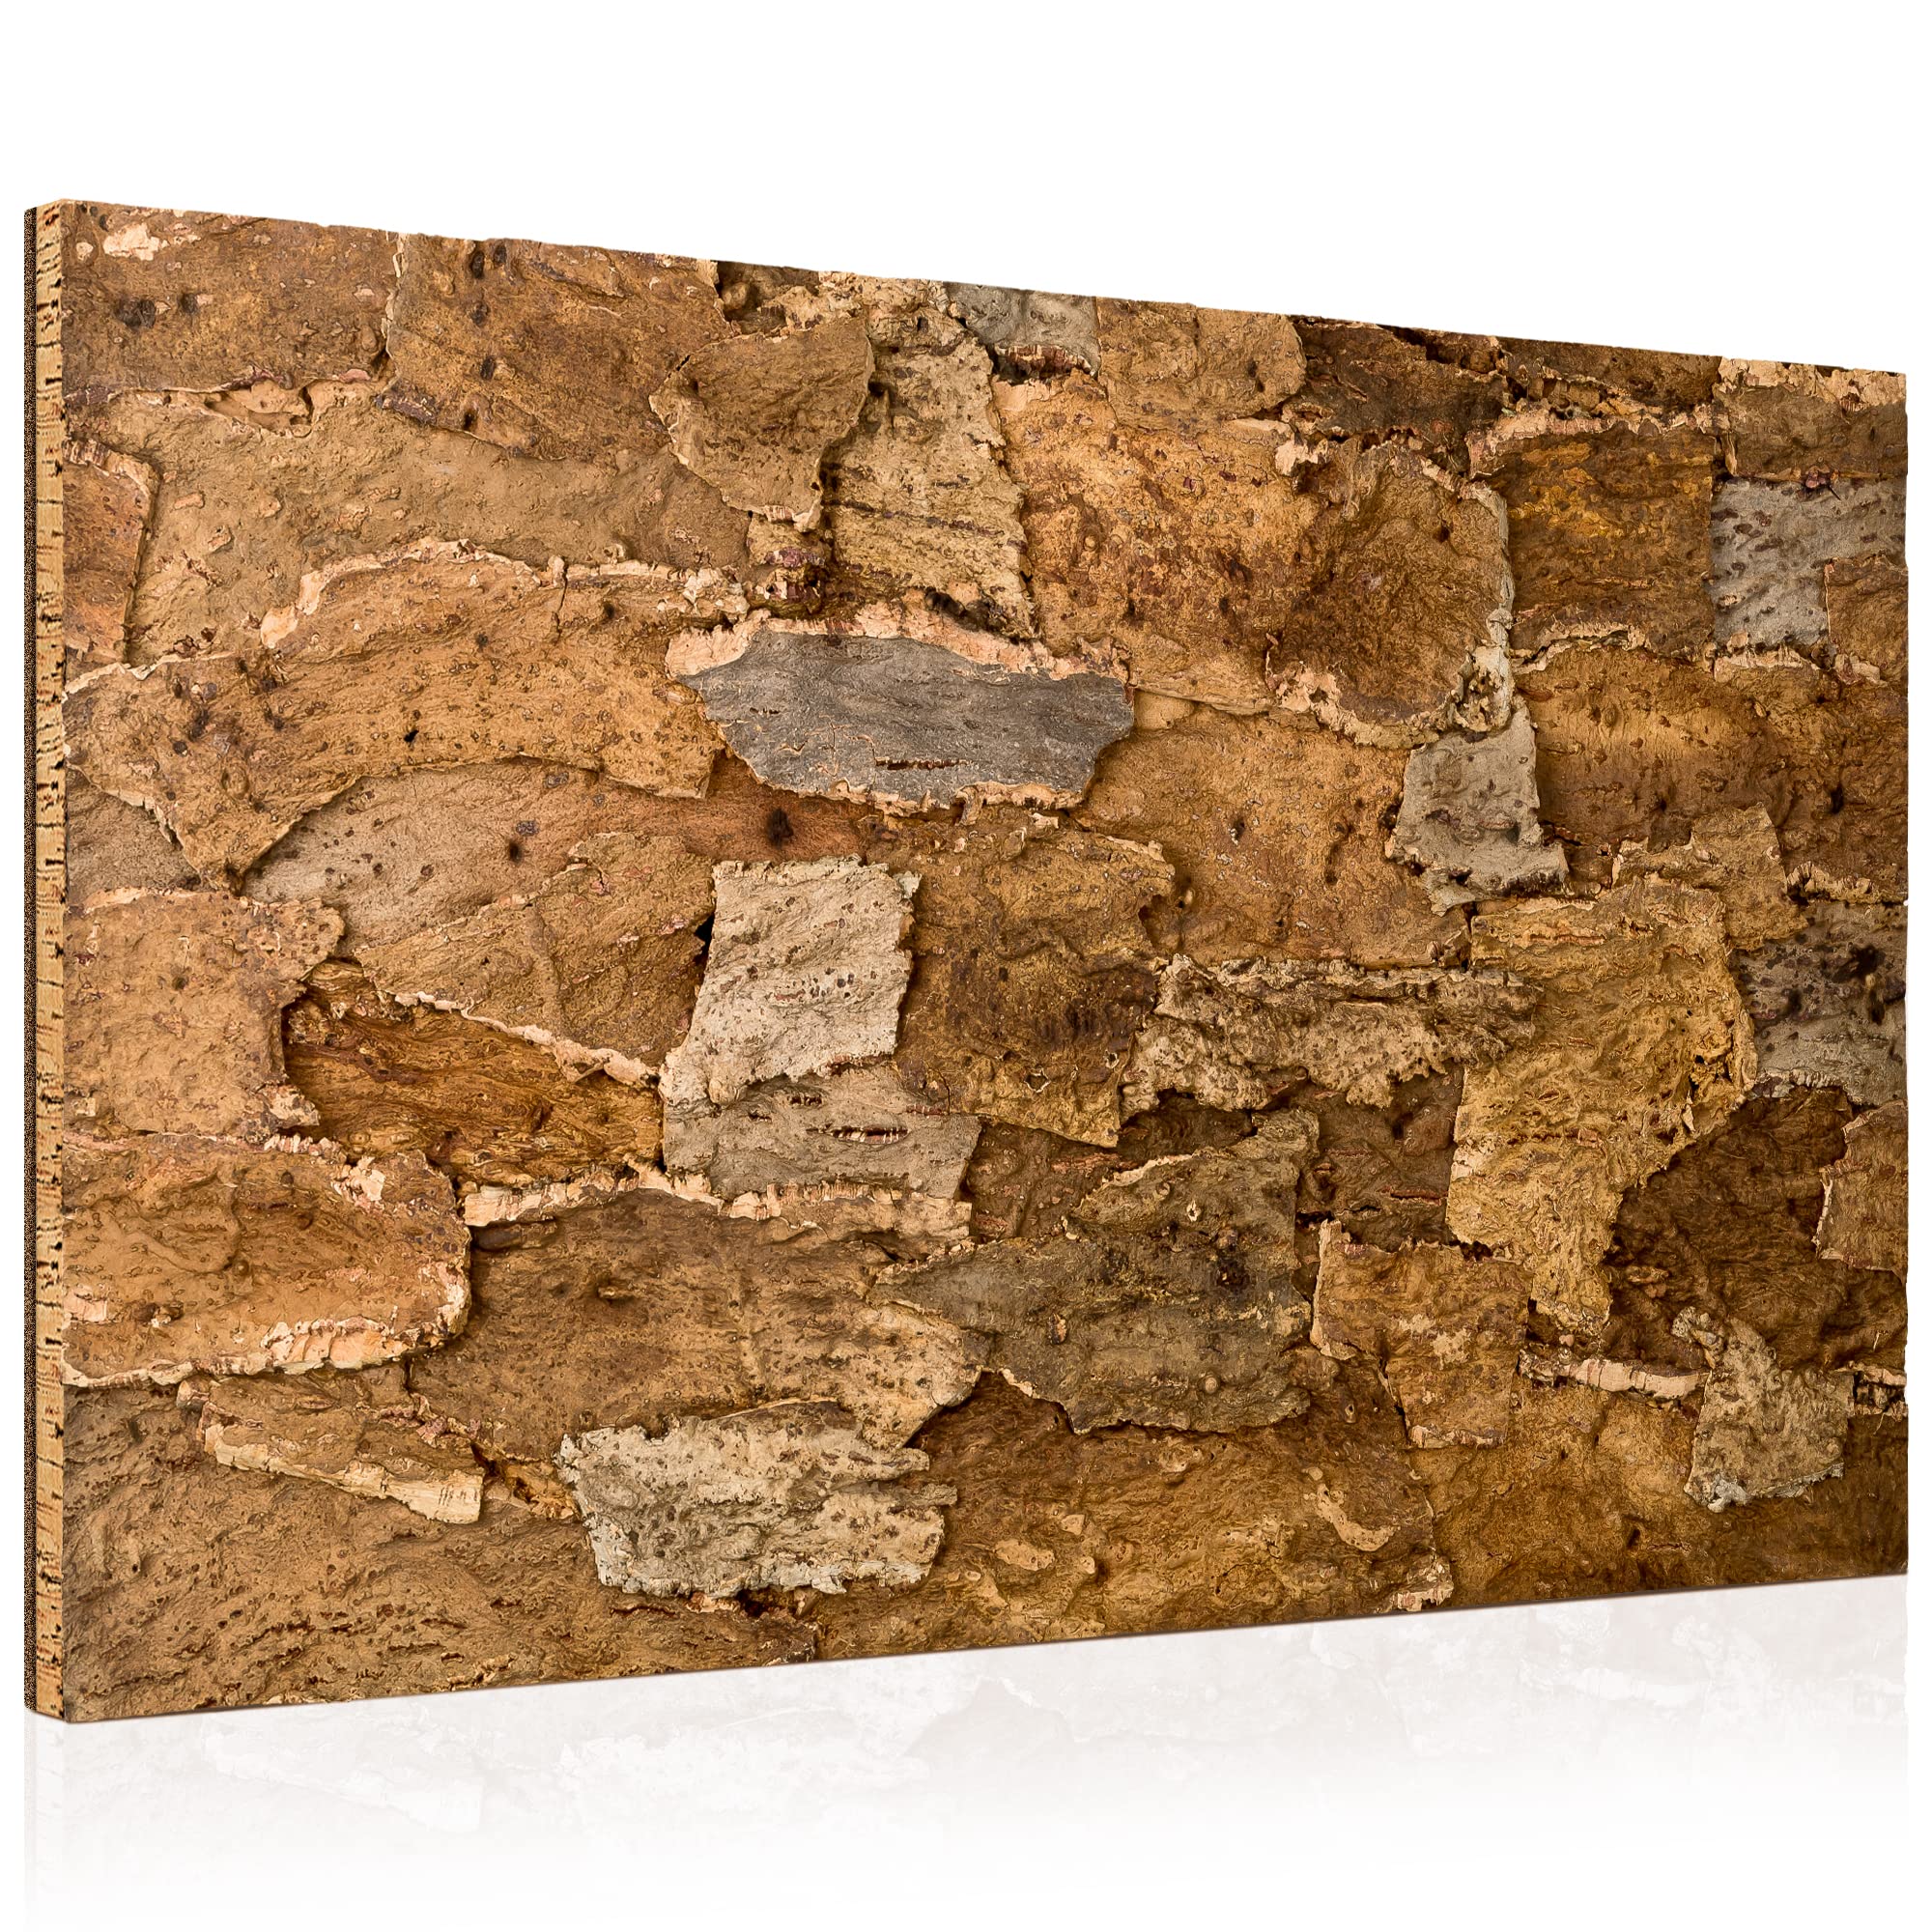 XXL Korkrückwand (Rückwand Terrarium), 3D Kork-Rückwand 90 x 60 cm im Stil Desert (Wüste) | natürliches Design aus Korkstücken | gereinigt & desinfiziert | Made in Portugal